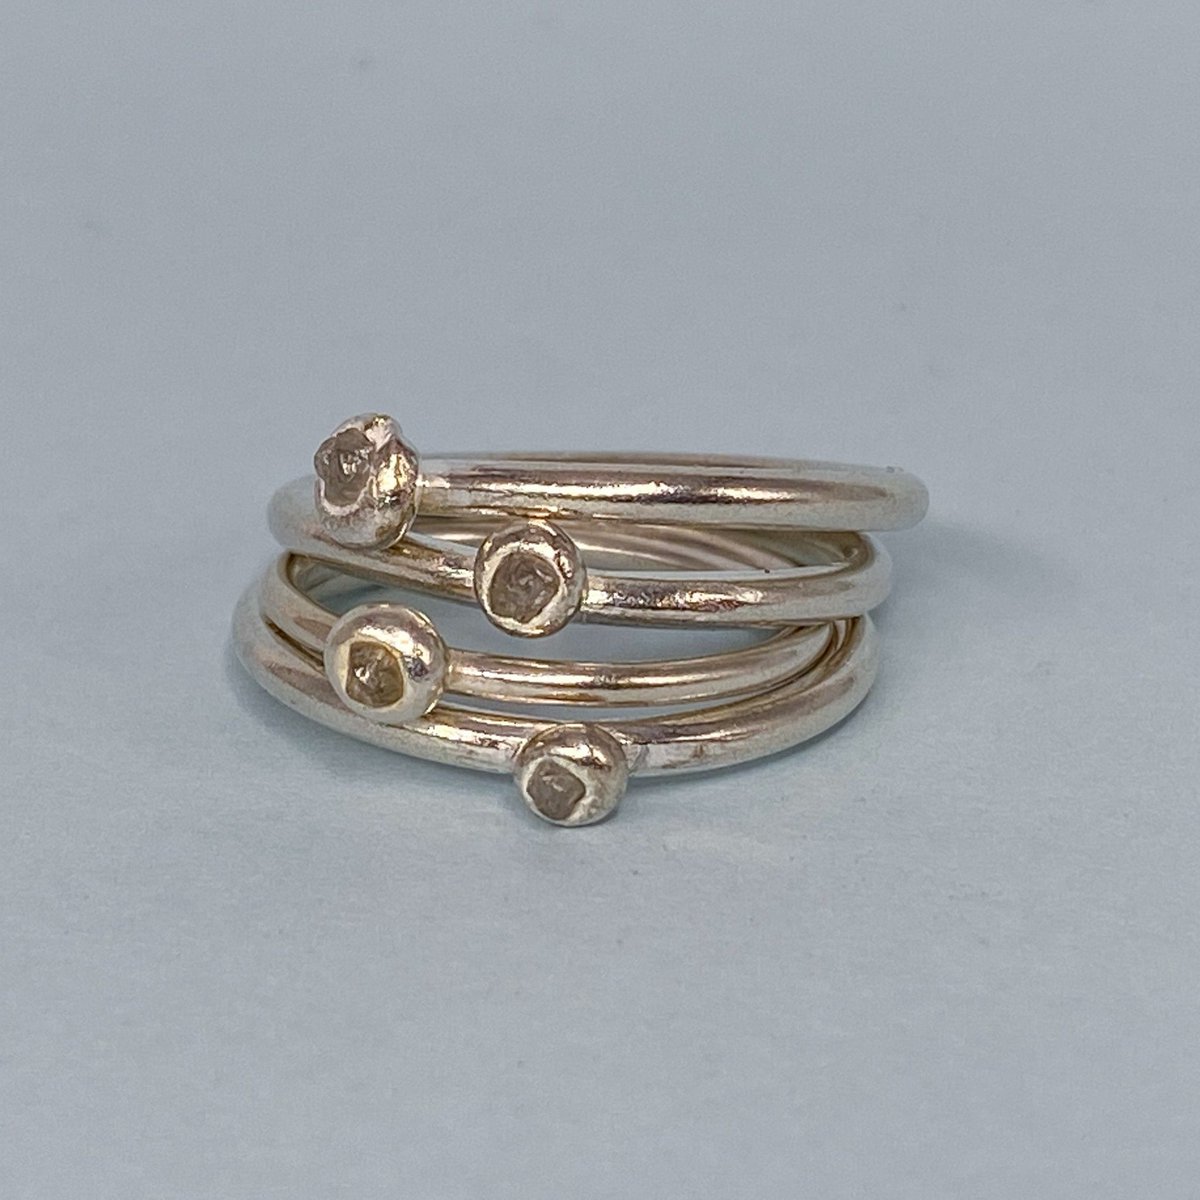 Raw Diamond Stacking Ring tuppu.net/bf07ec6 ##UKGiftHour #MHHSBD #bizbubble #inbizhour #UKHashtags #HandmadeHour #shopsmall #giftideas #RingStack